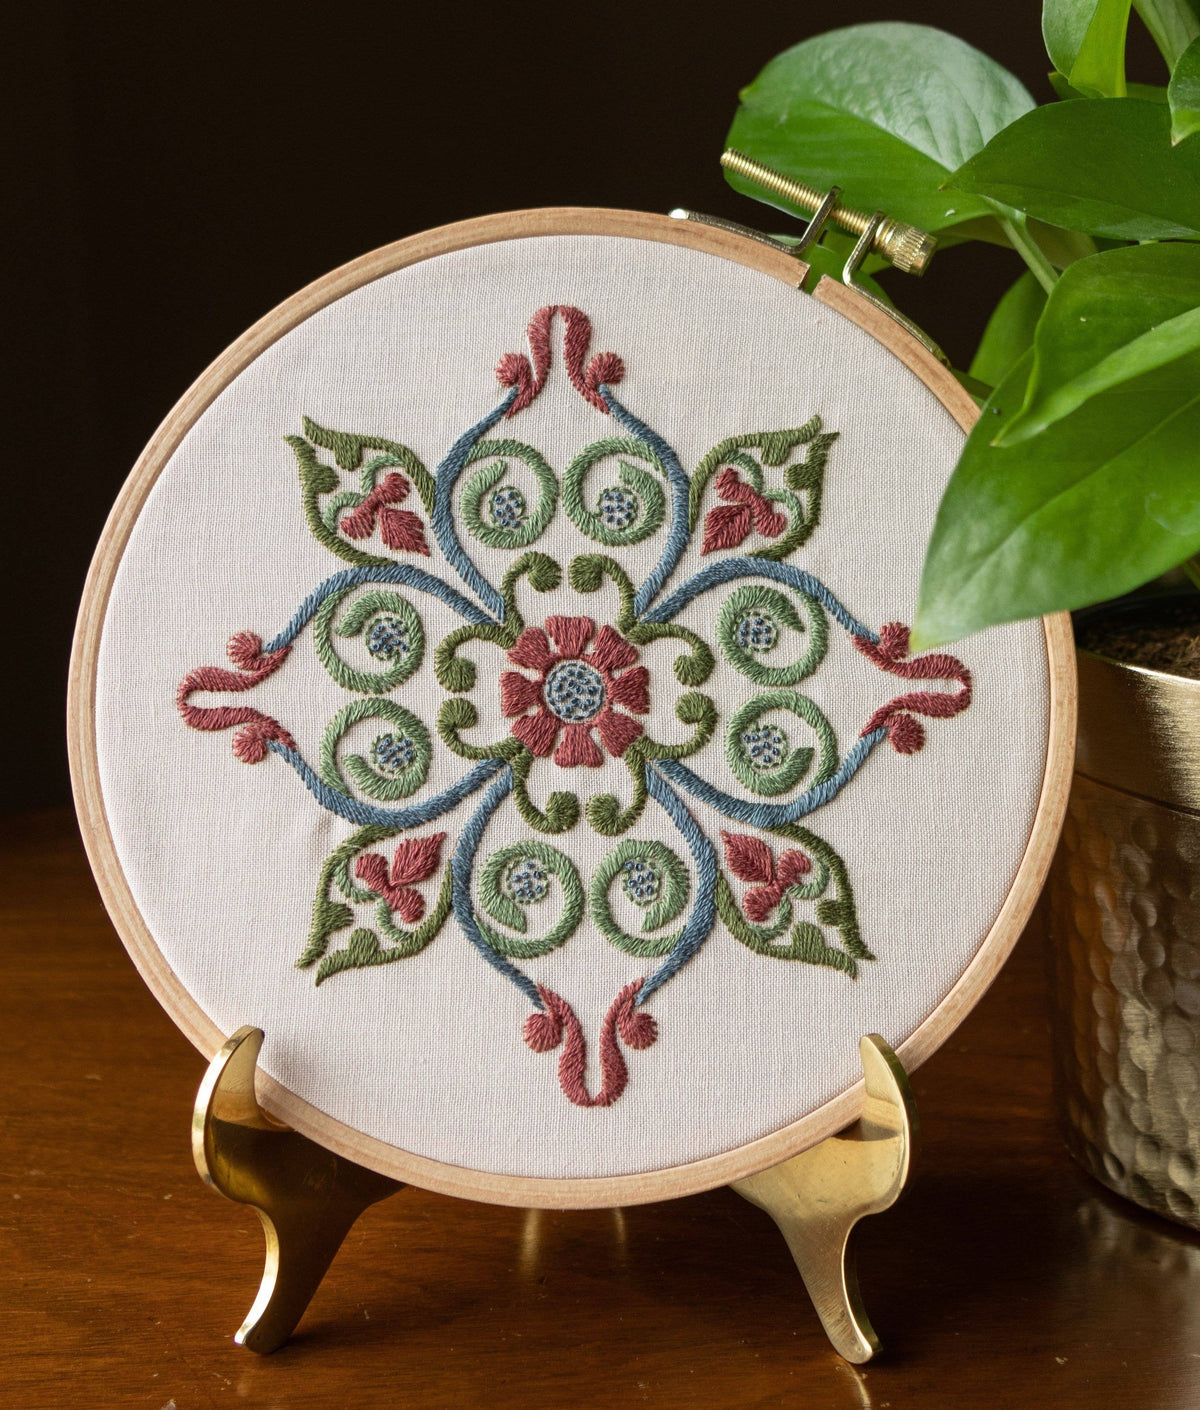 Georgian Rose Embroidery Kit